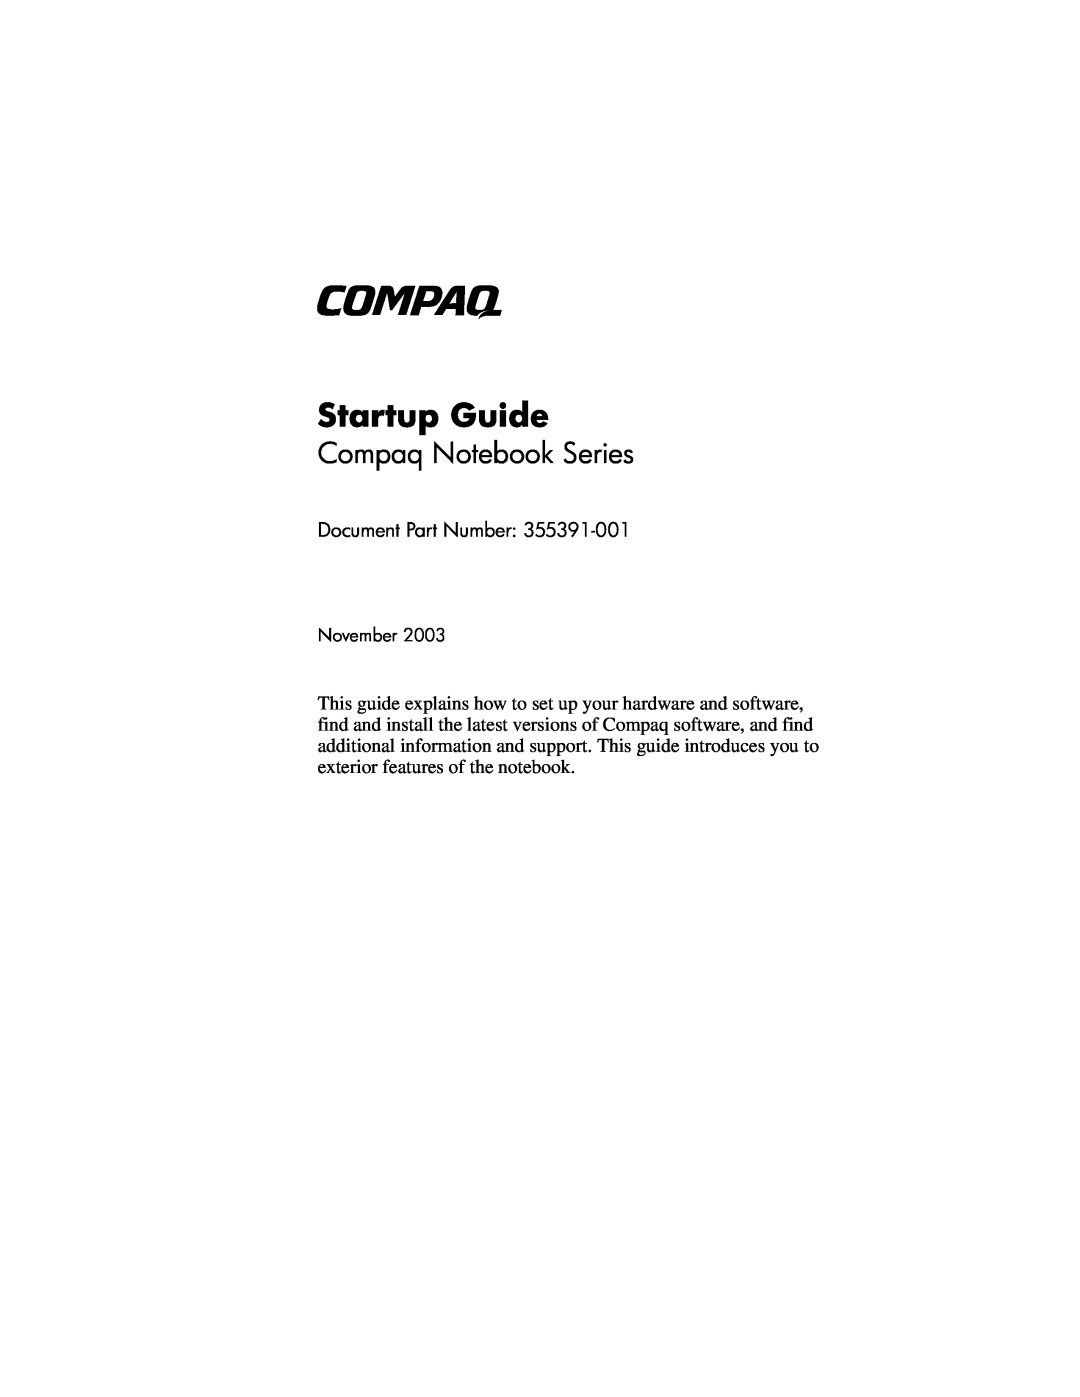 HP R3070US, R3065US, R3060US, R3050US, R3056RS manual Startup Guide, Compaq Notebook Series, Document Part Number, November 